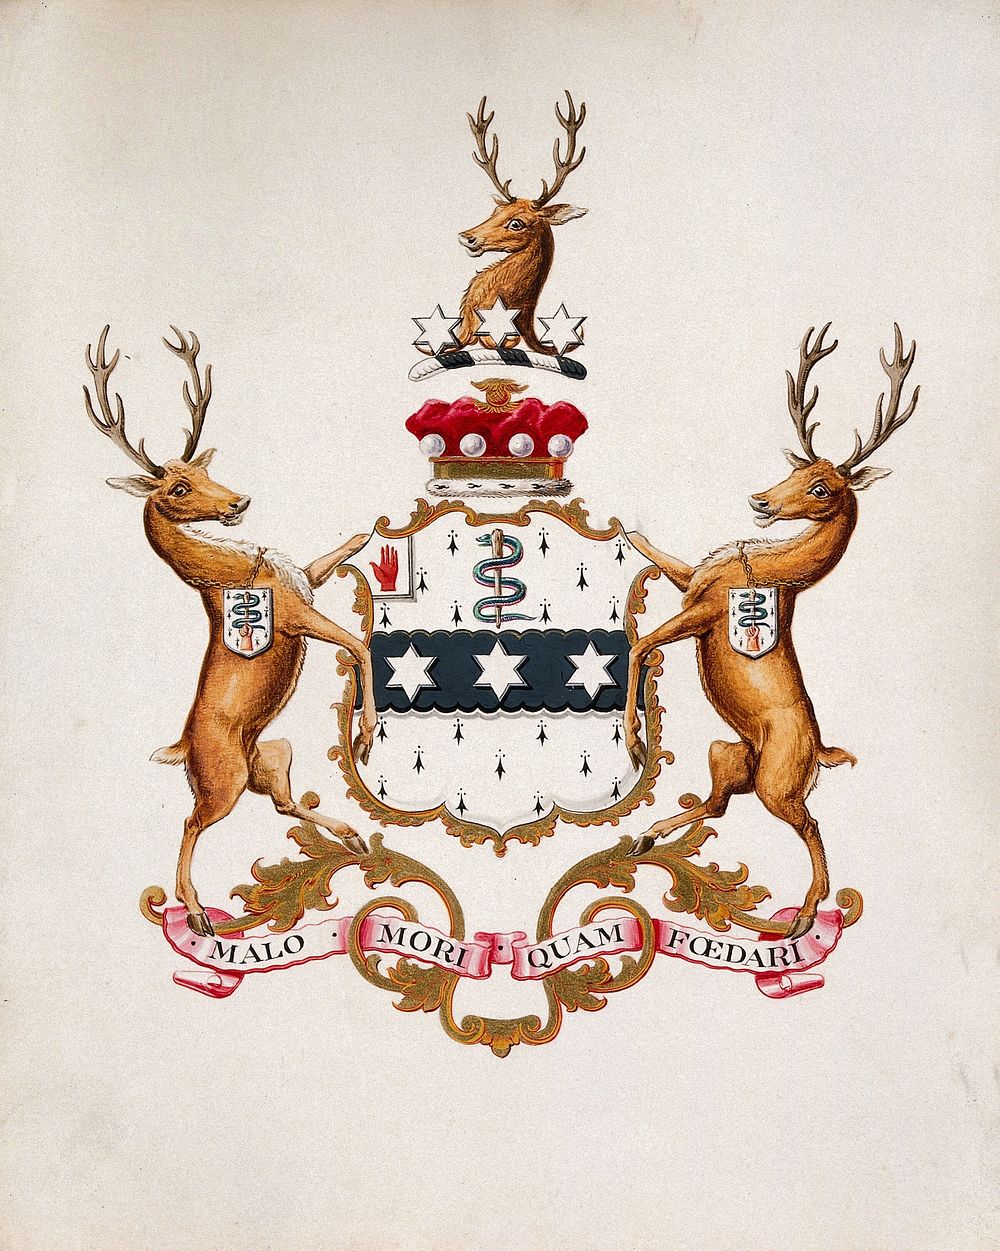 Achievement of arms of Joseph Lister, Baron Lister. Watercolour.